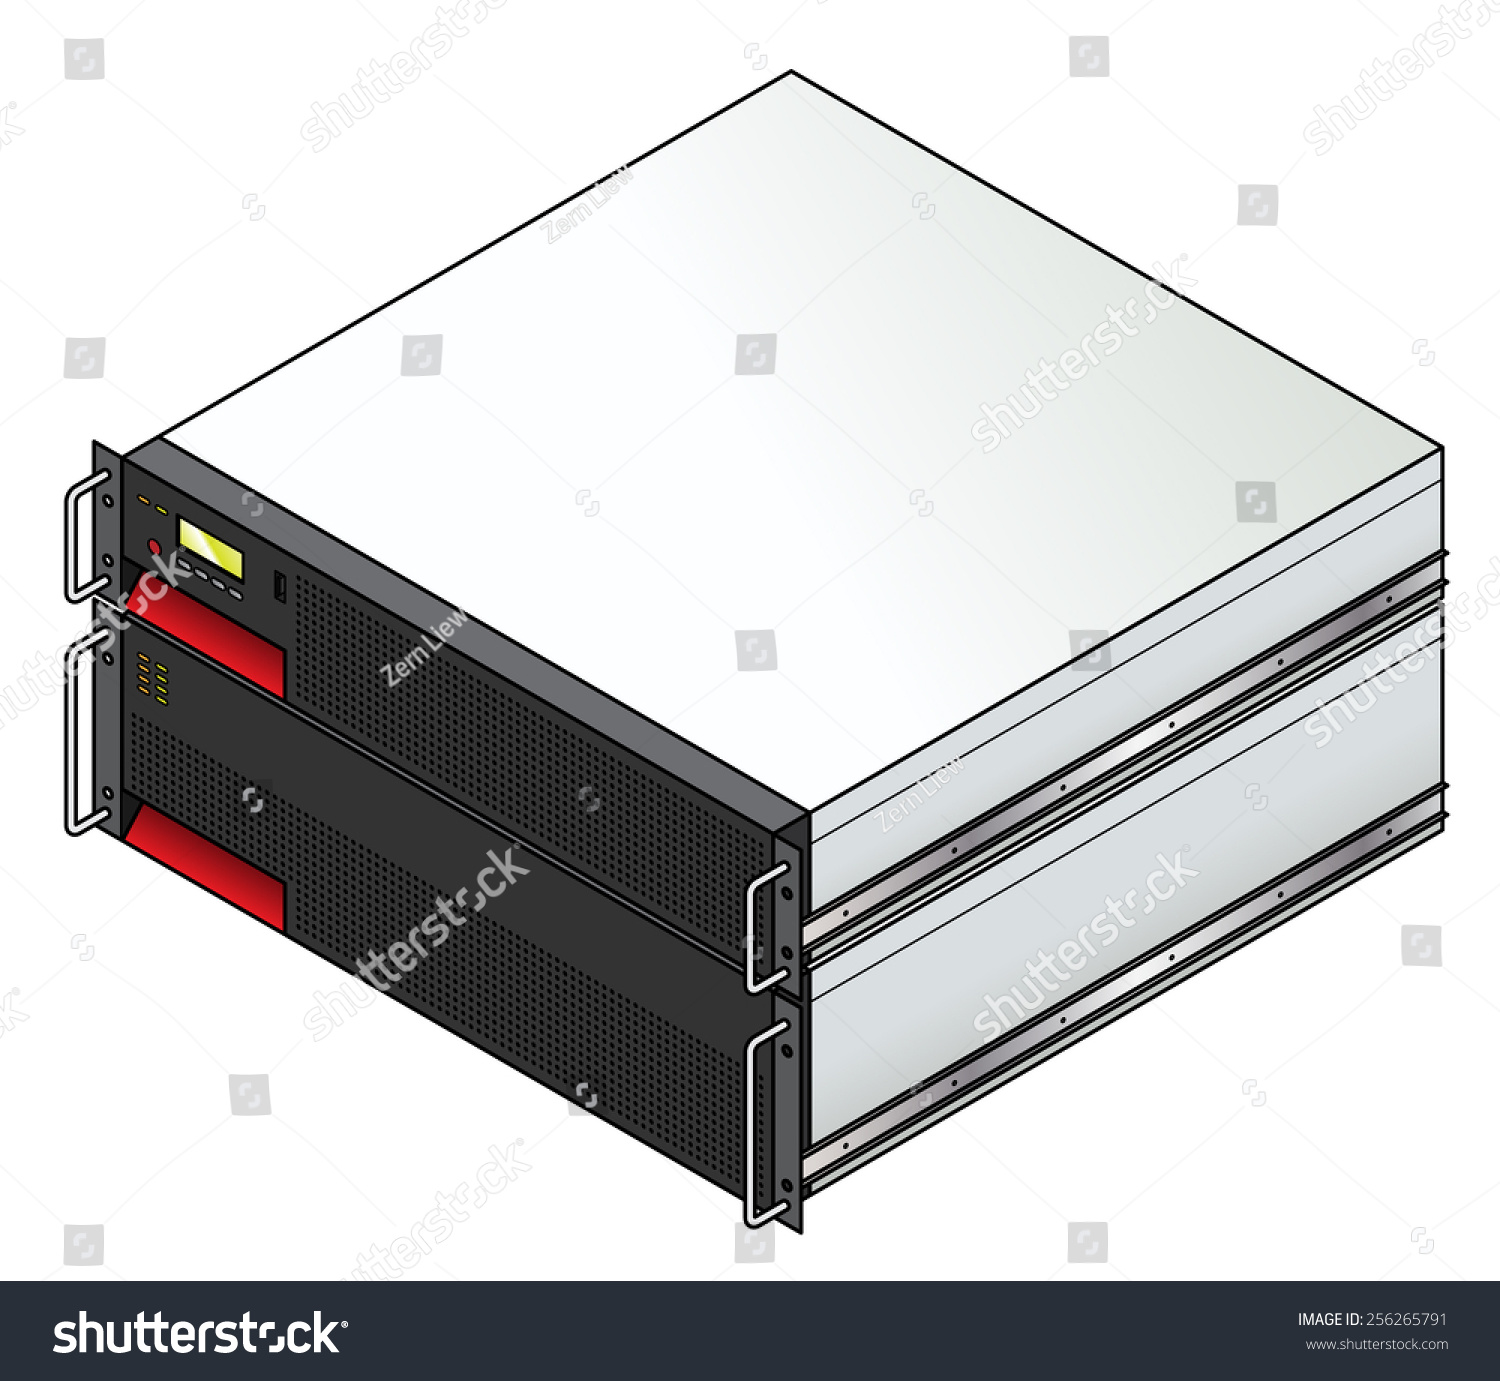 SVG of Rack-mount server components: a 2u UPS (uninterruptible power supply ) controller unit with a 3u battery unit. svg